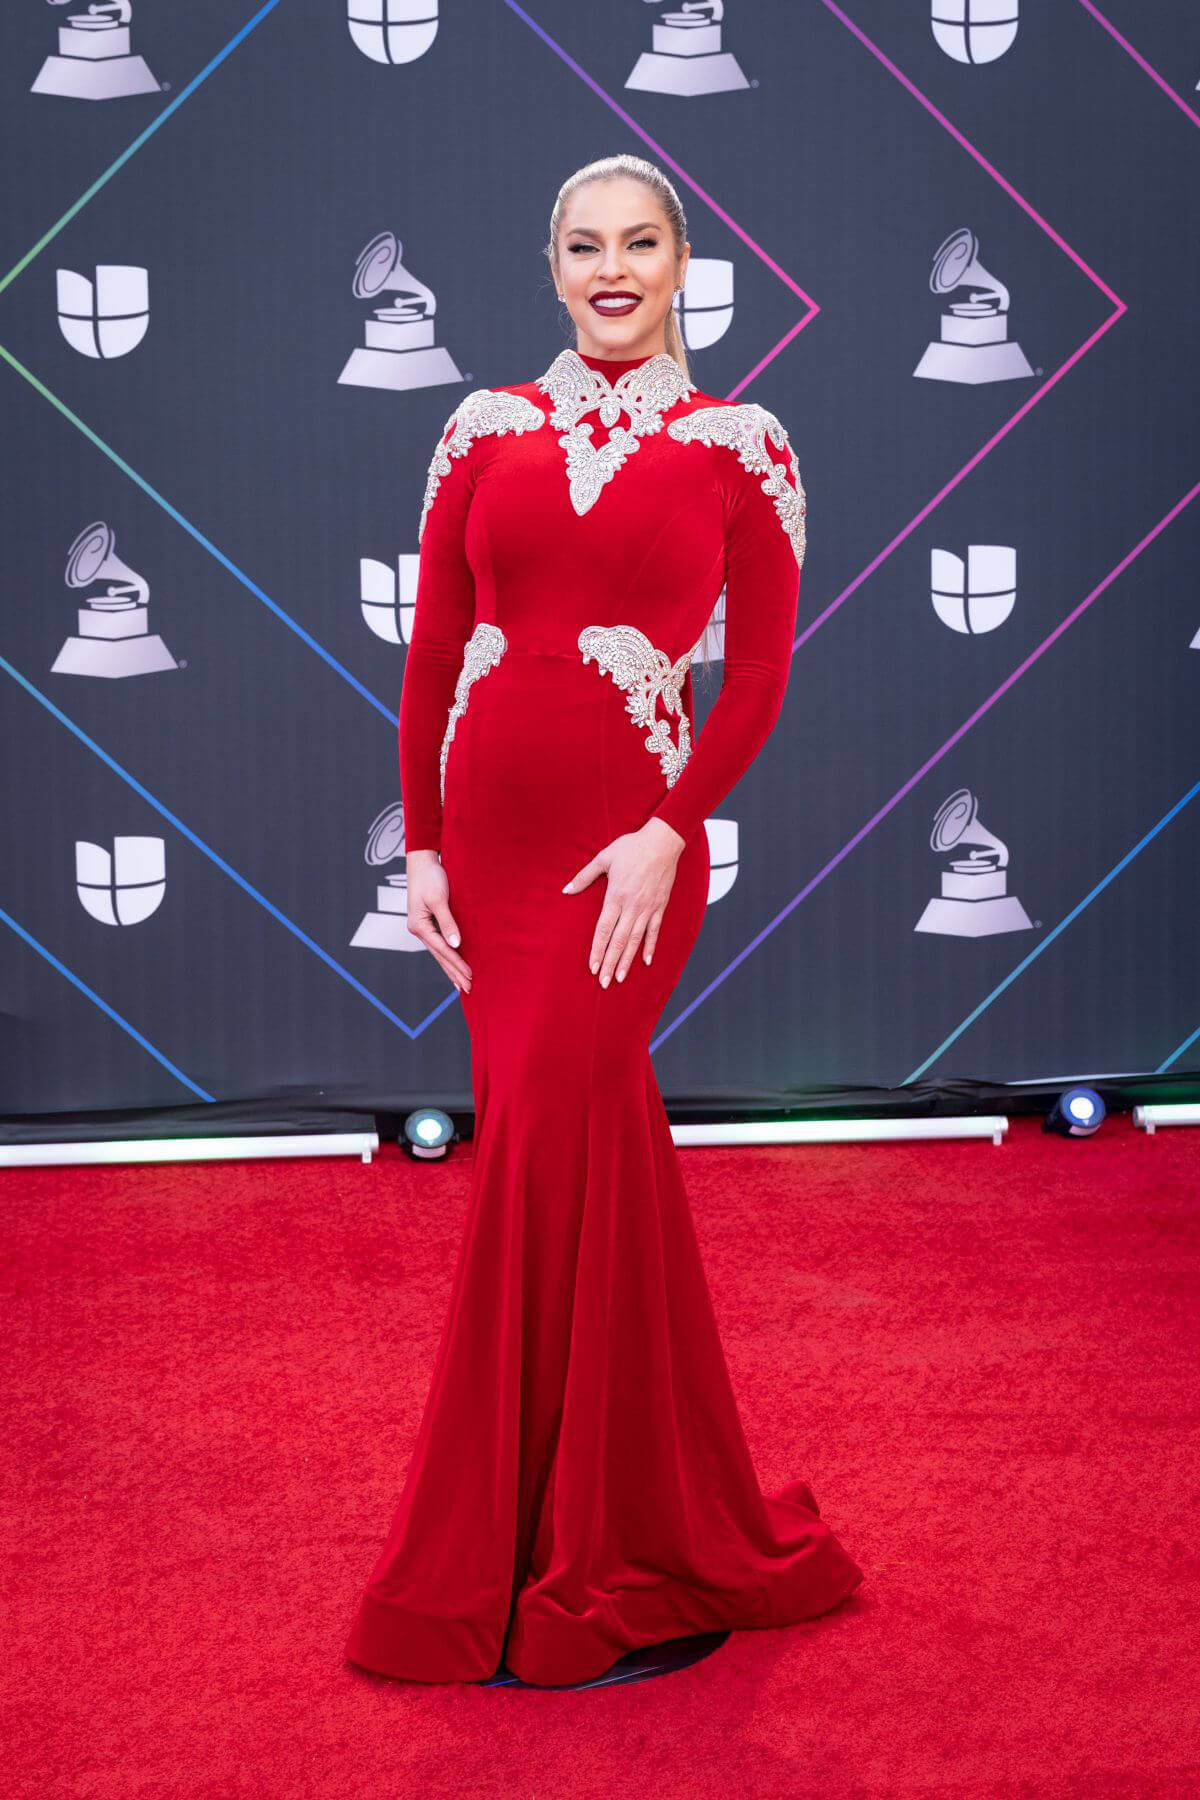 Daniela di Giacomo attends 22nd Annual Latin Grammy Awards in Las Vegas 11/18/2021